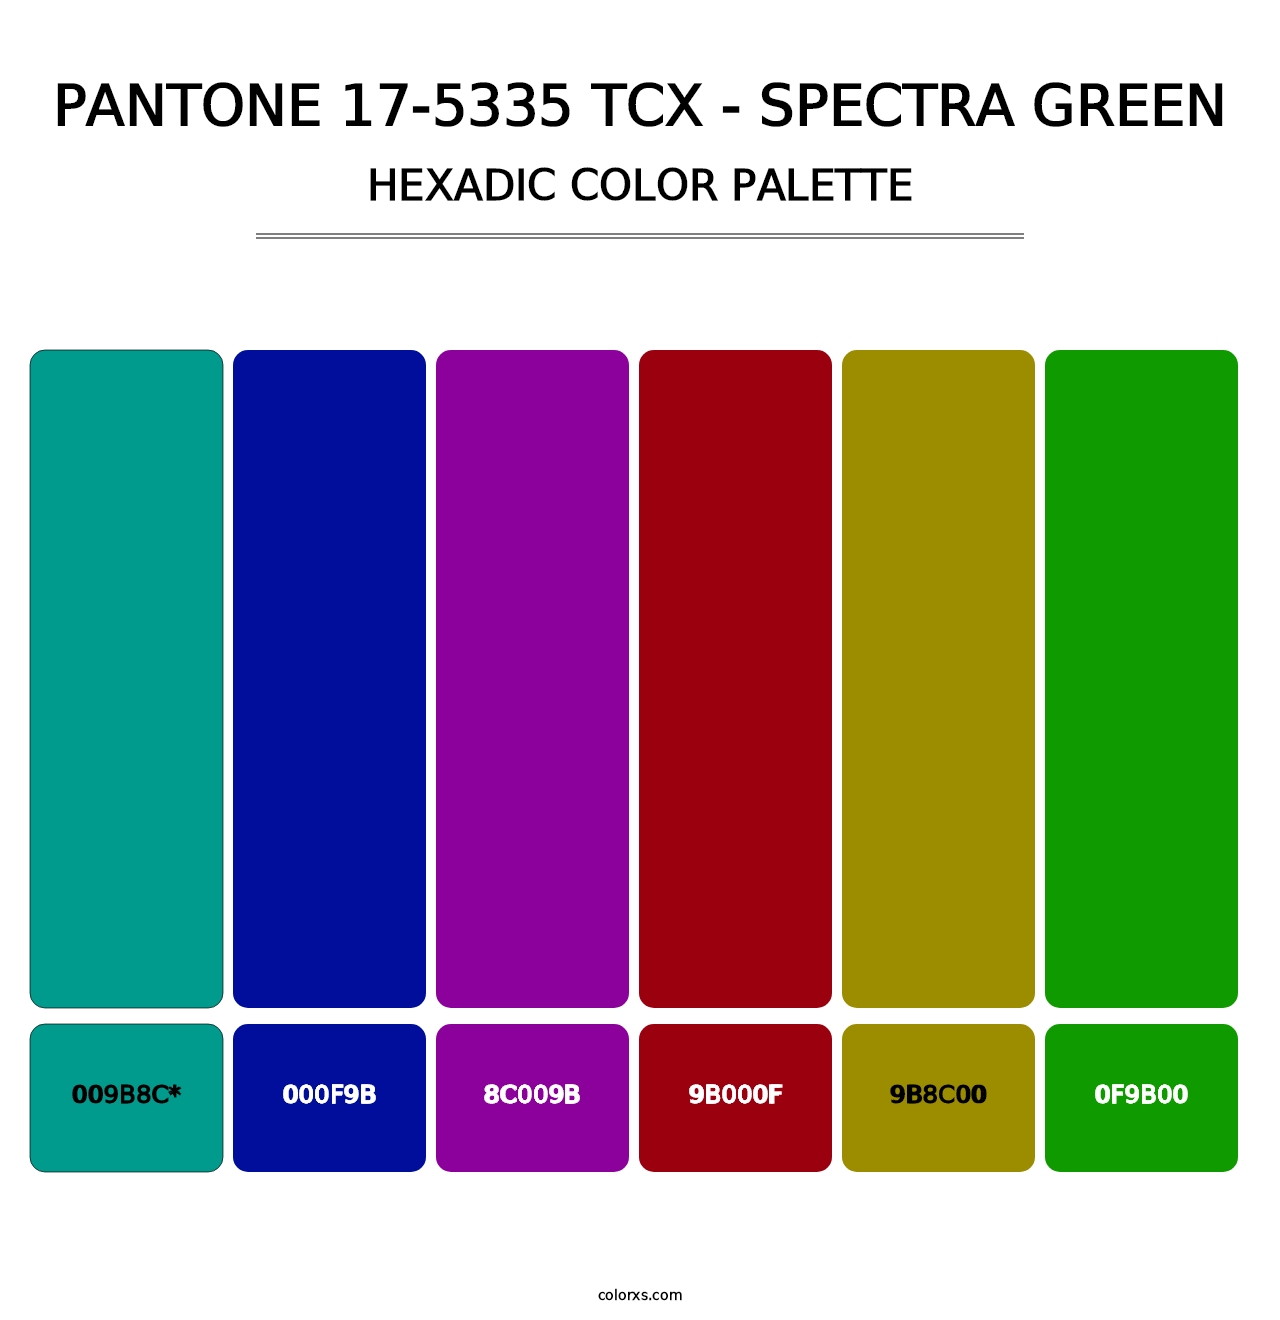 PANTONE 17-5335 TCX - Spectra Green - Hexadic Color Palette